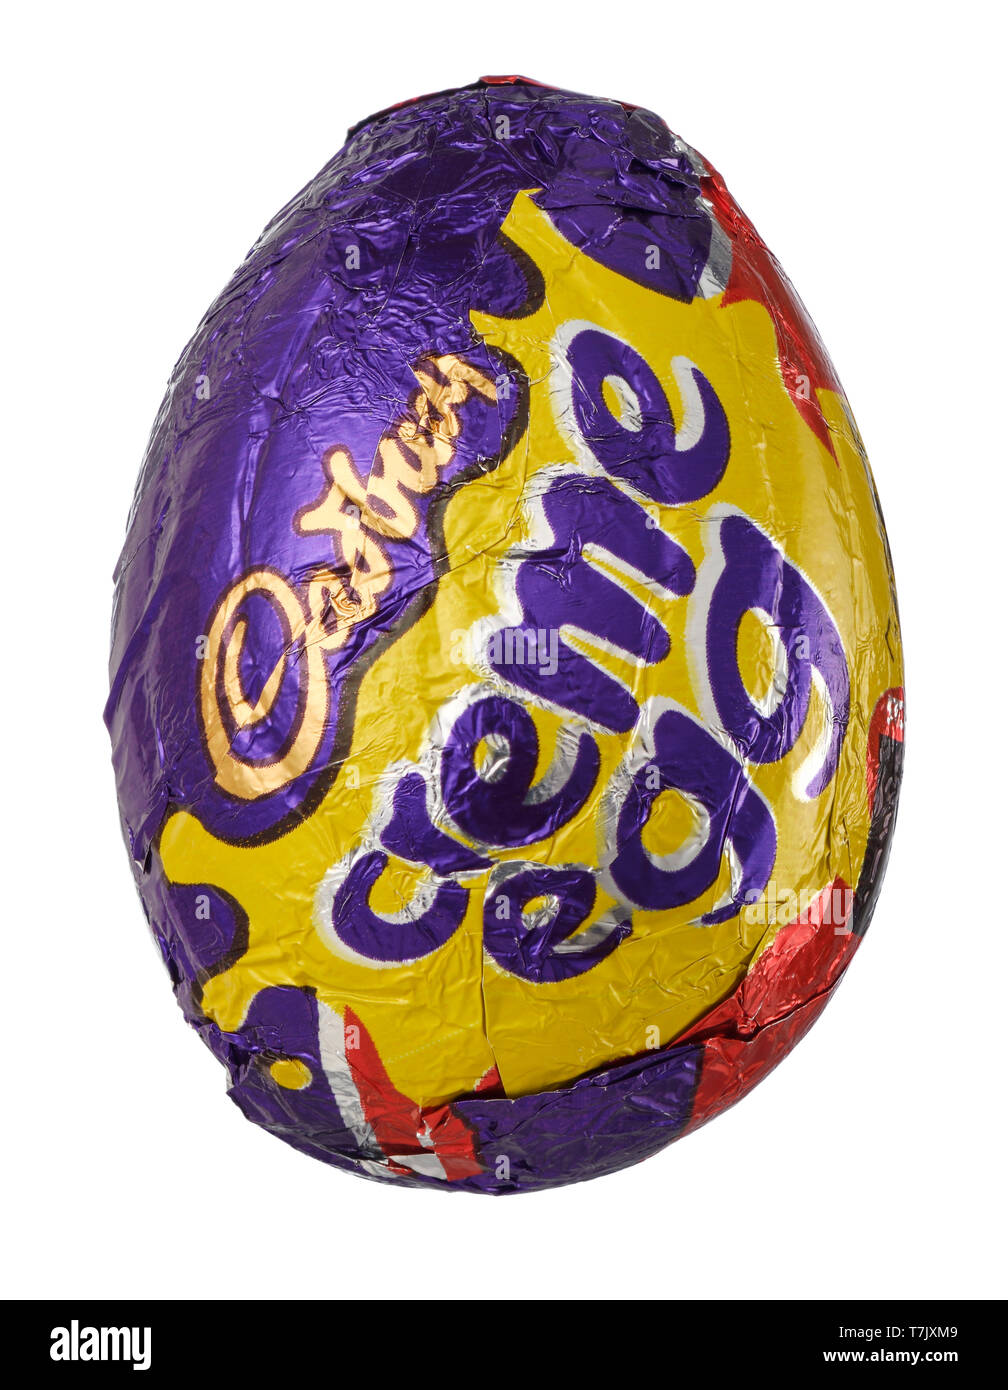 Cadbury Creme Egg Banque D'Images